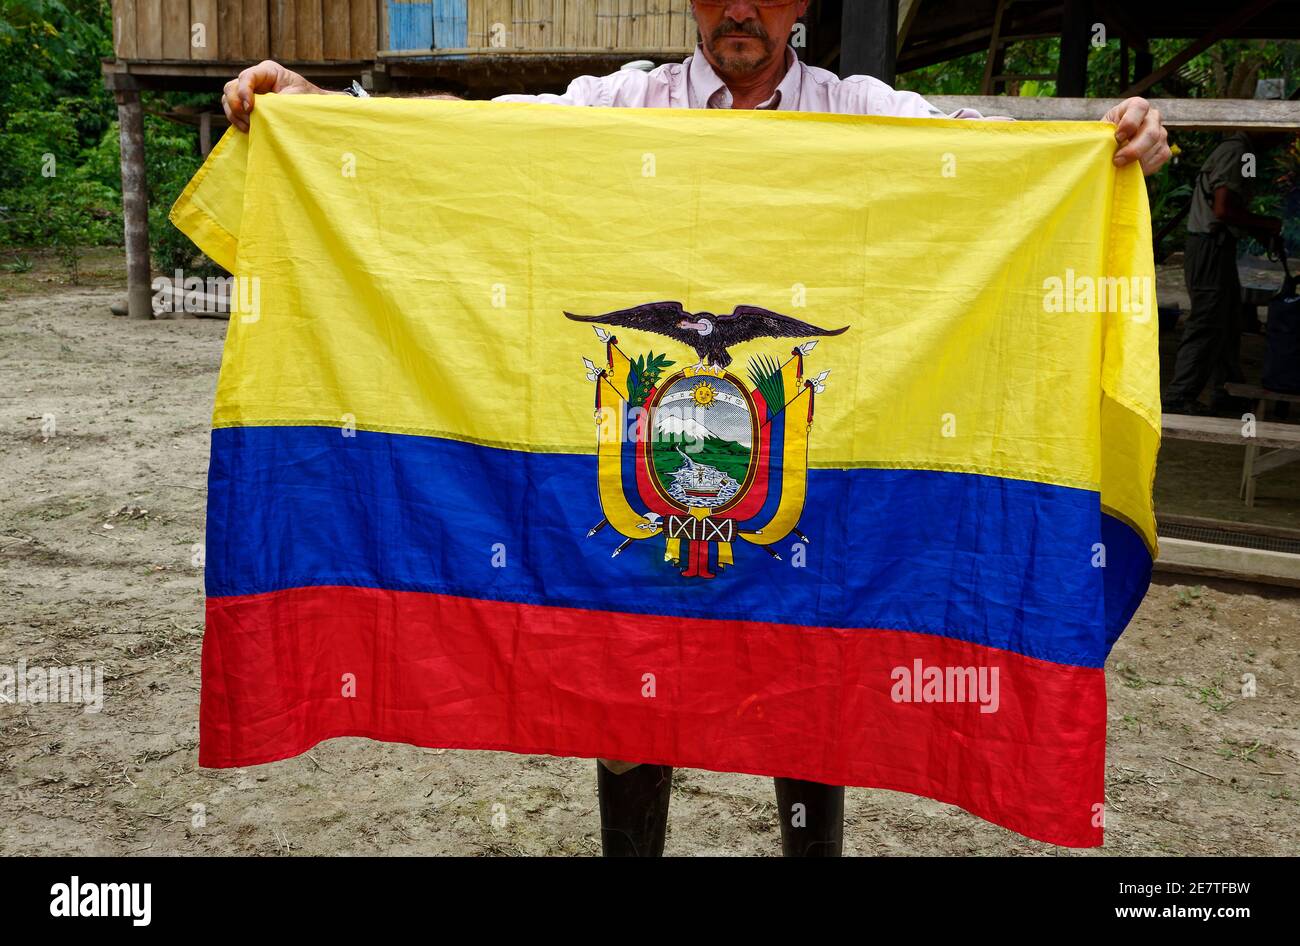 Ecuadorean flag, yellow, blue, red,coat of arms, condor with wings spread, scene, man holding, South America, Ecuador, MR Stock Photo